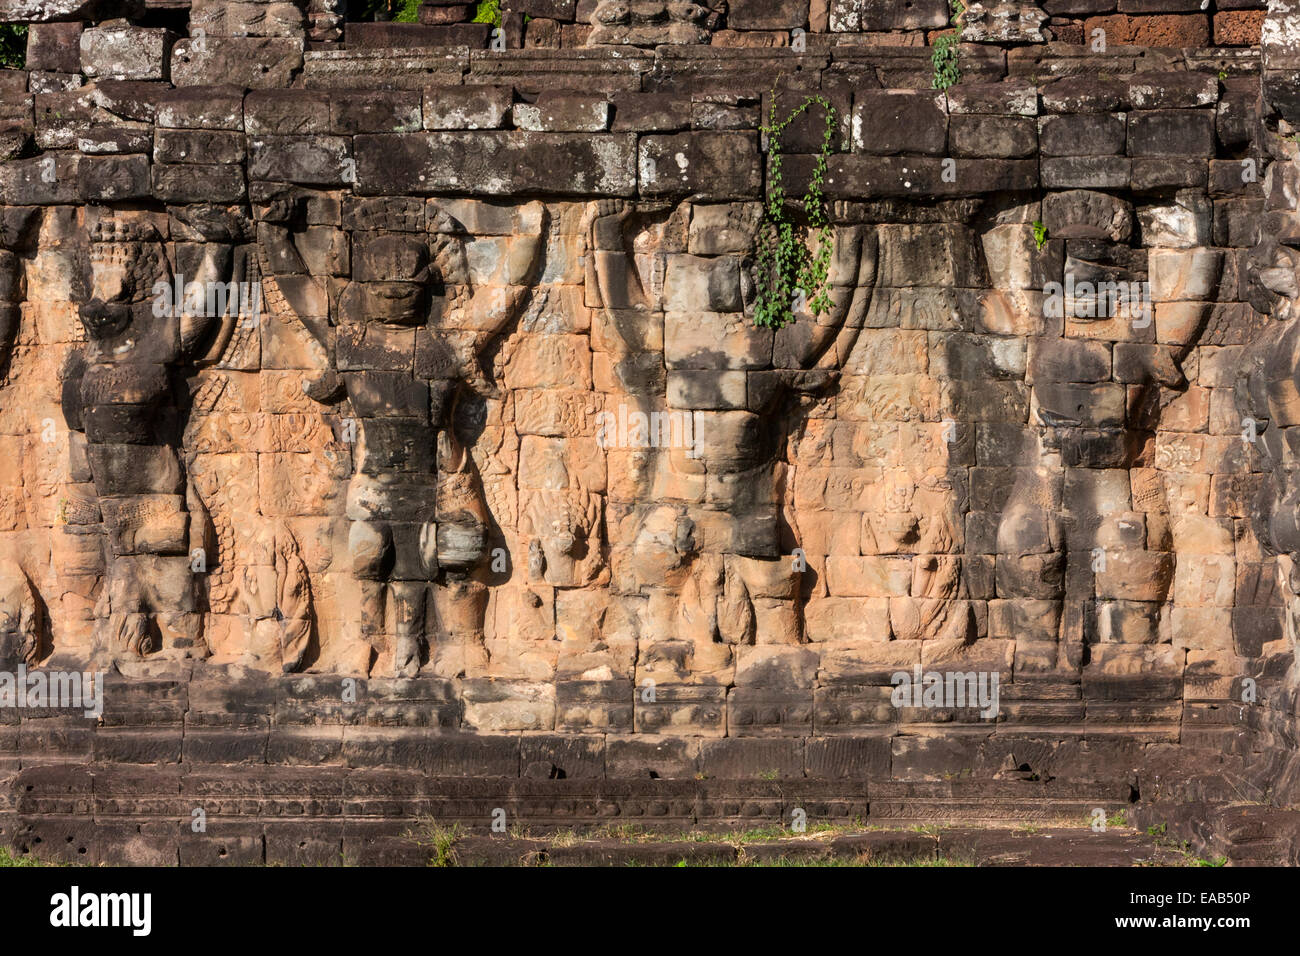 Cambodia, Angkor Thom.  Garuda Figures Holding up the Walkway adjacent to the Elephant Terrace. Stock Photo